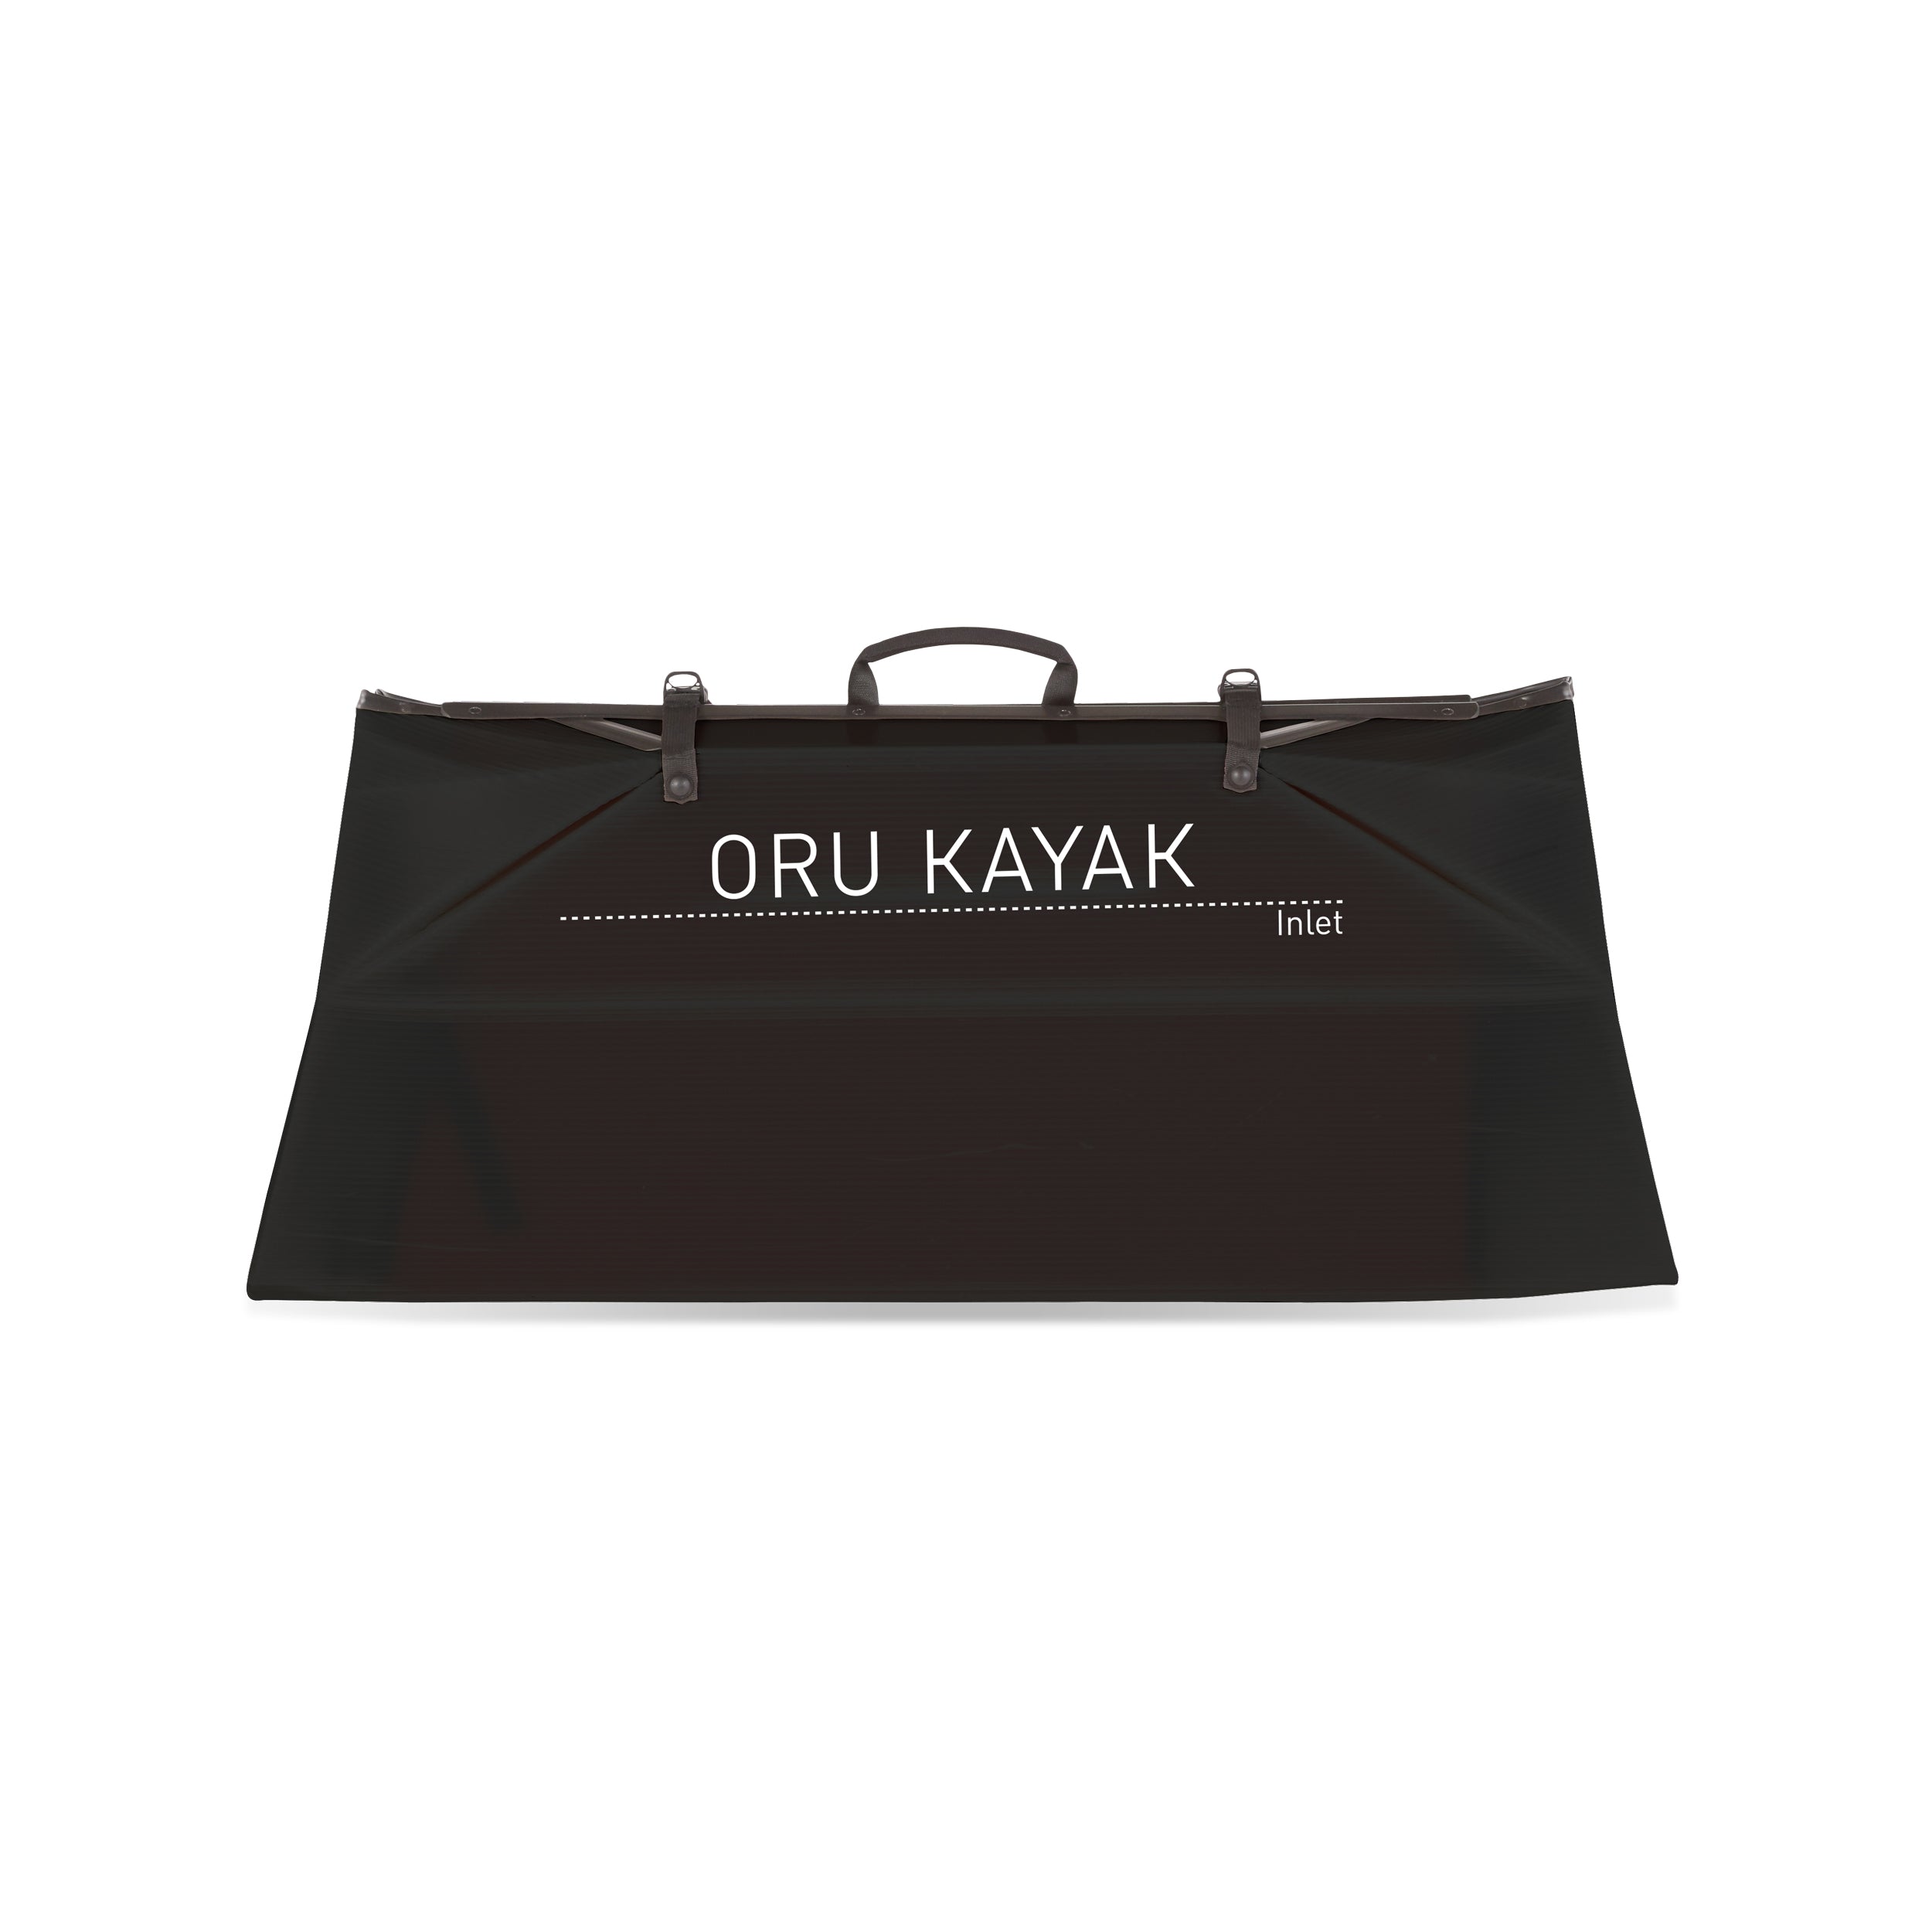 1x Portable Kayak Boat Bags Accessories Inflatable Boat Bag Storage Handbag  -AU